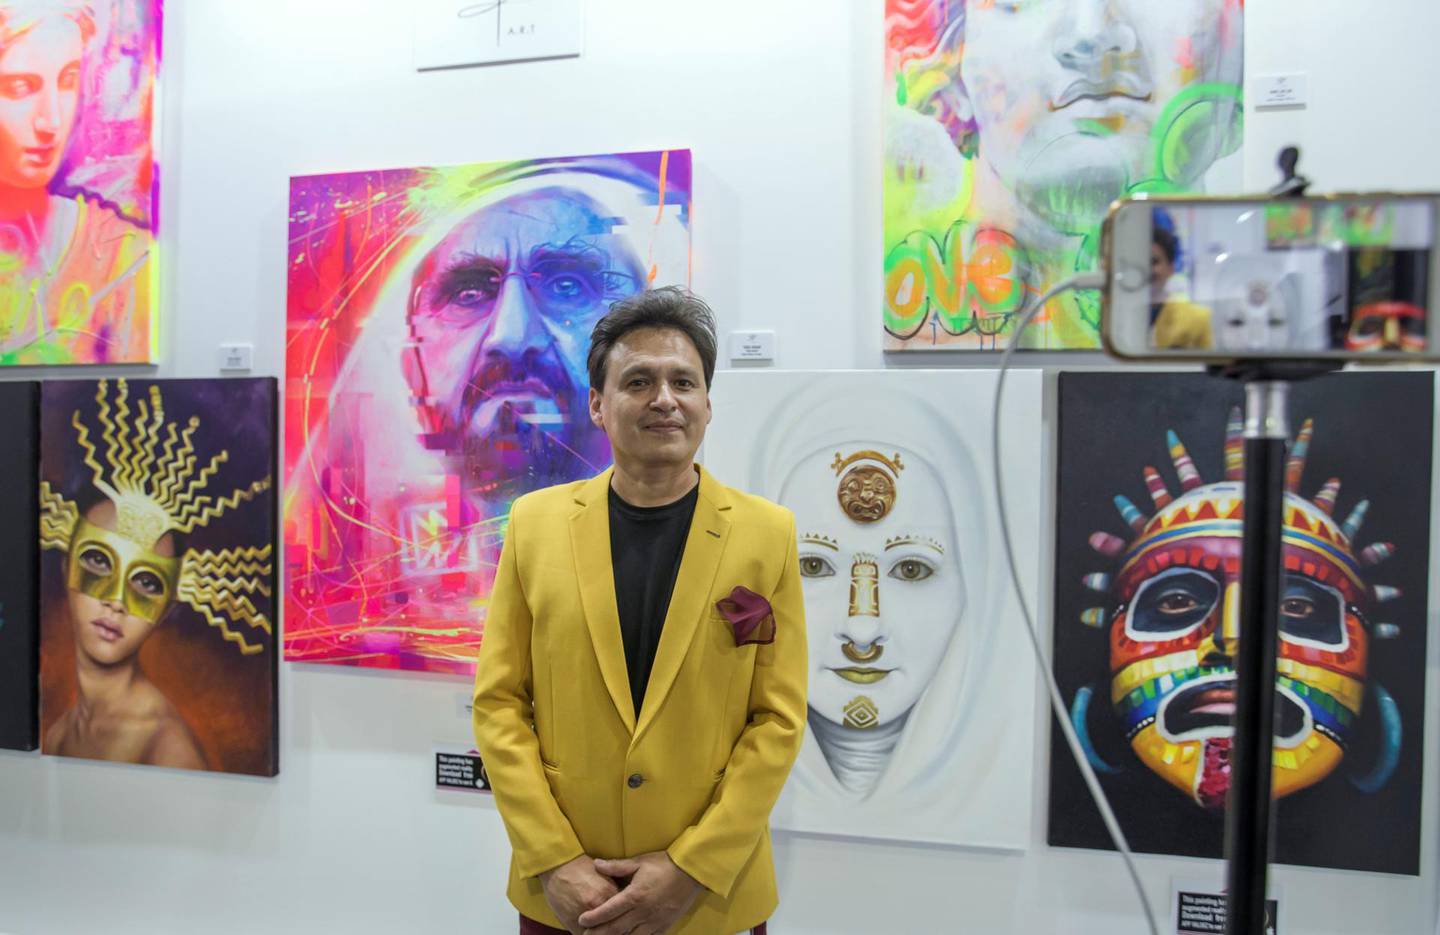 Dubai, United Arab Emirates - Artist Coco Valdez with his augmented artworks at the World Art Dubai at Dubai World Trade Centre.  Leslie Pableo for The National for Razmig's story